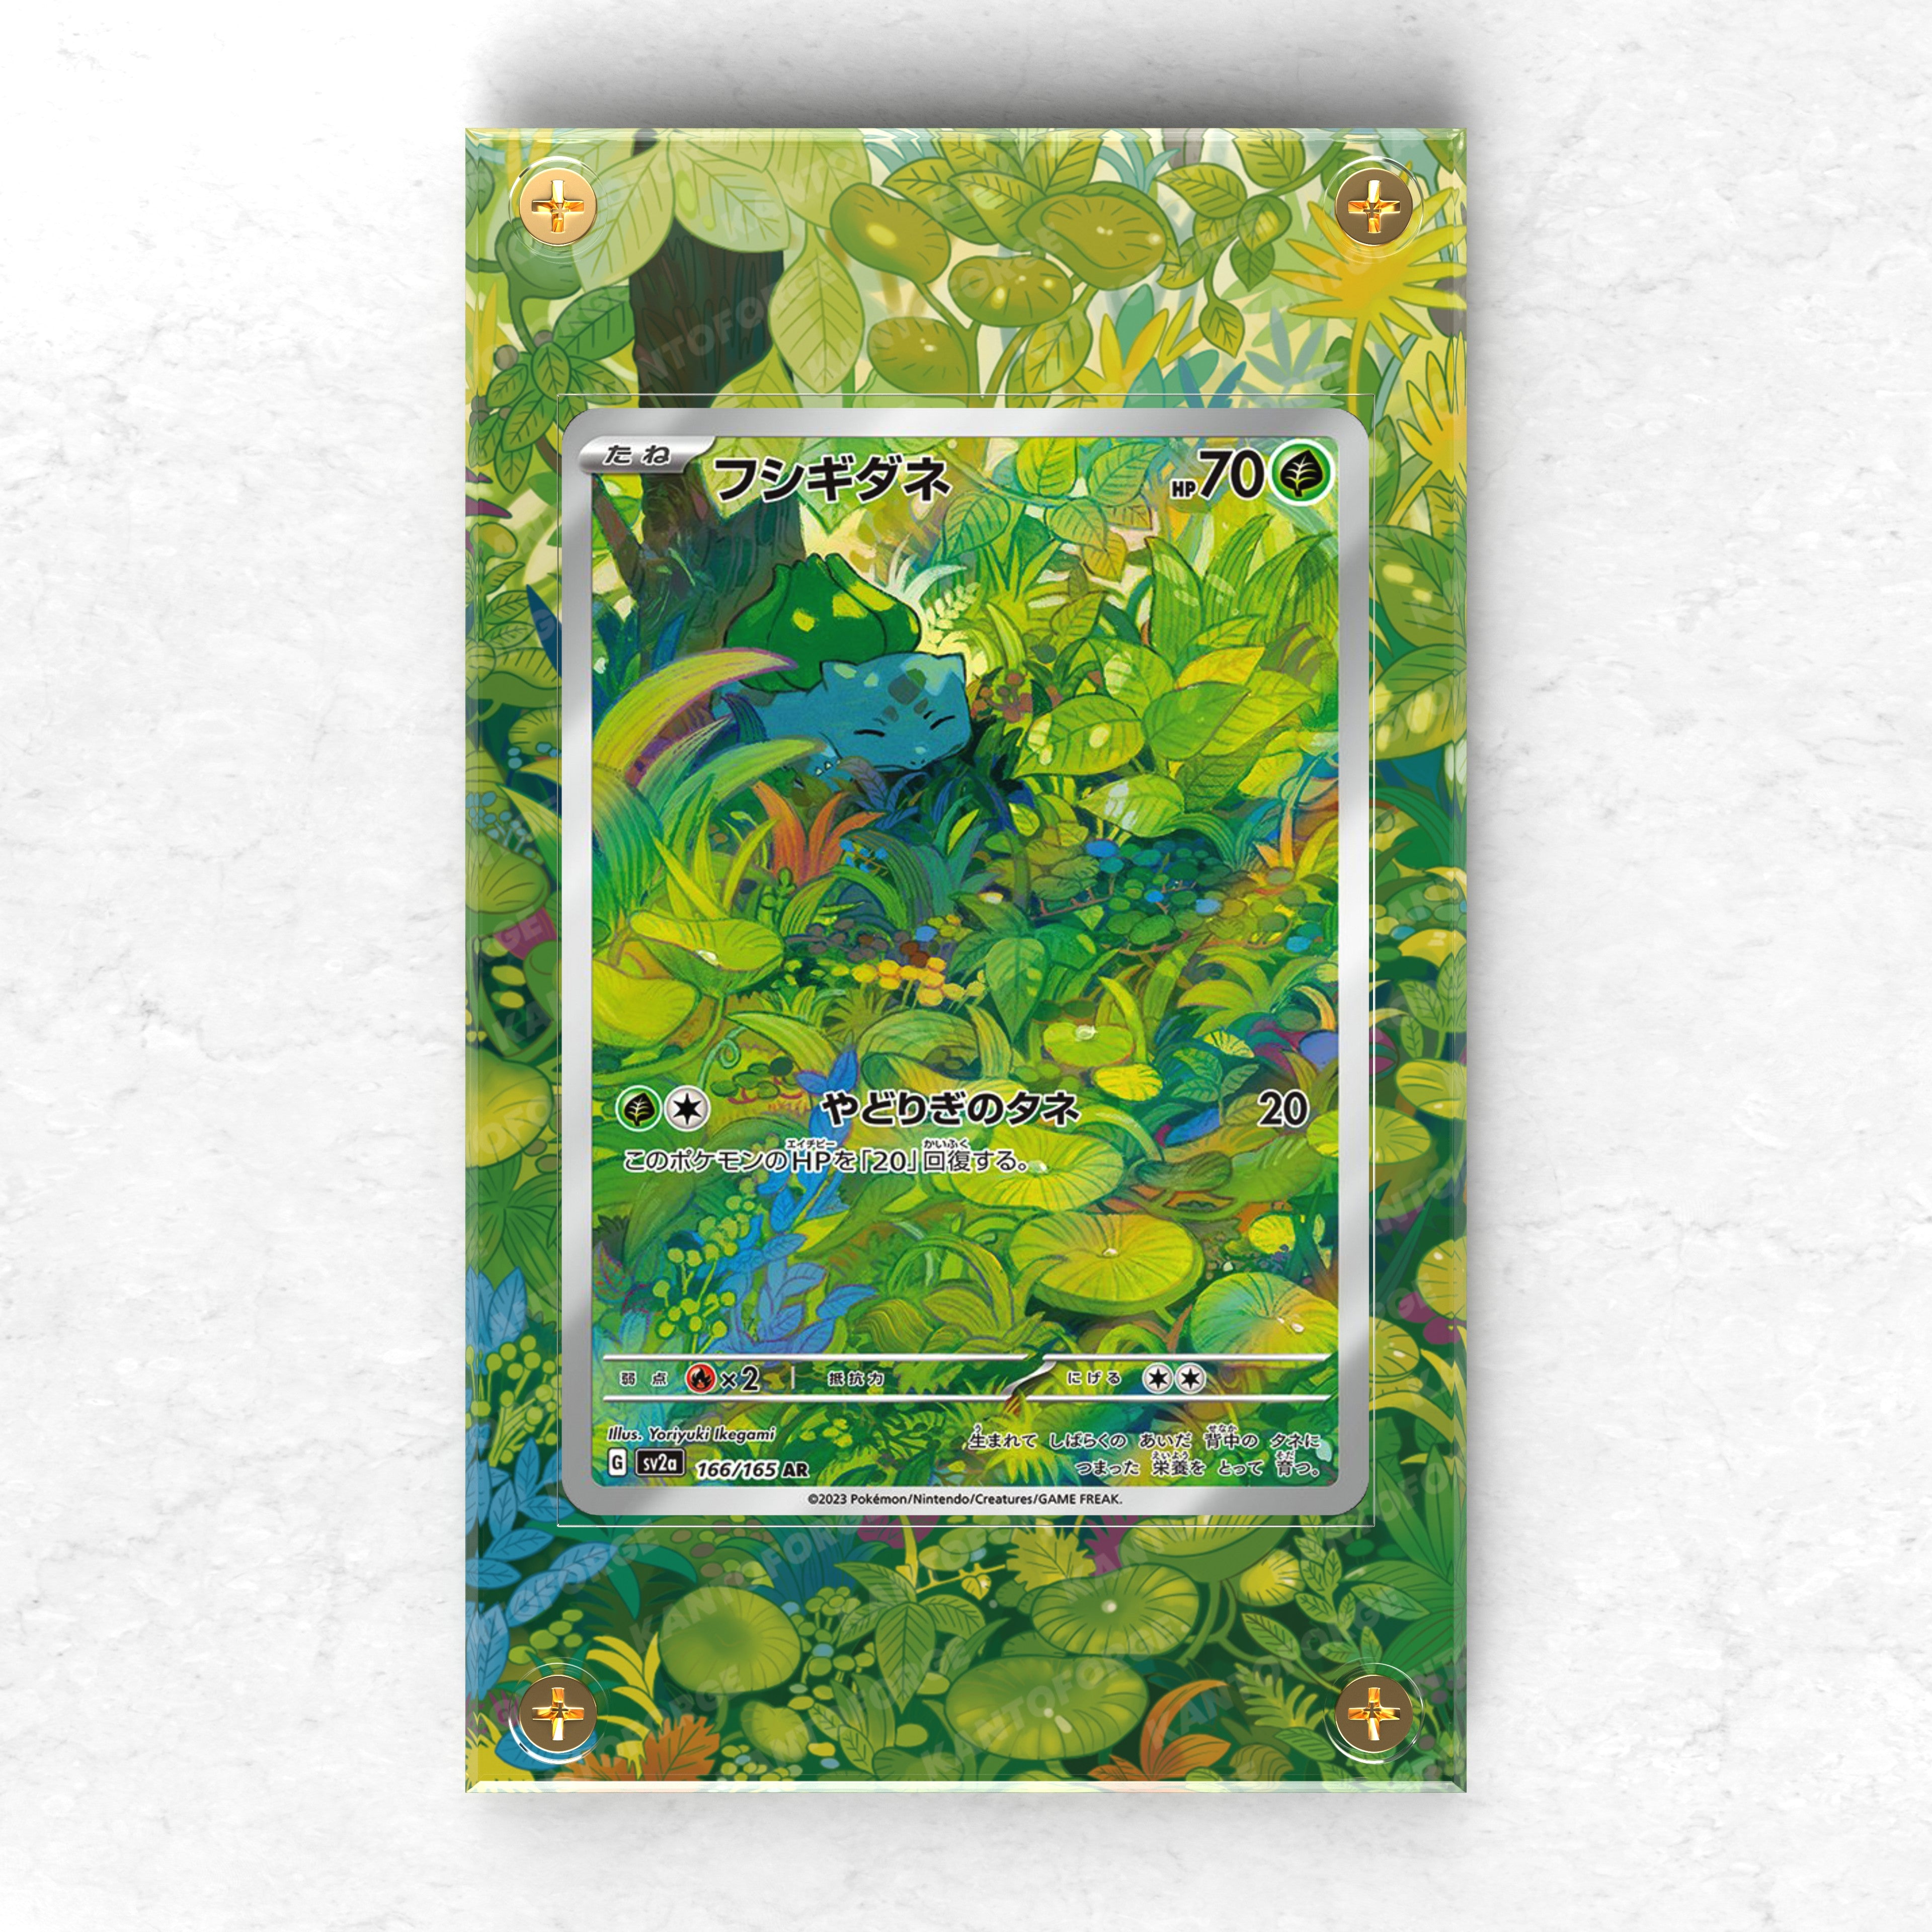 Bulbasaur Evo Line Bundle (Bulbasaur/Ivysaur/Venusaur) - Pokémon Extended Artwork Protective Card Display Case x3